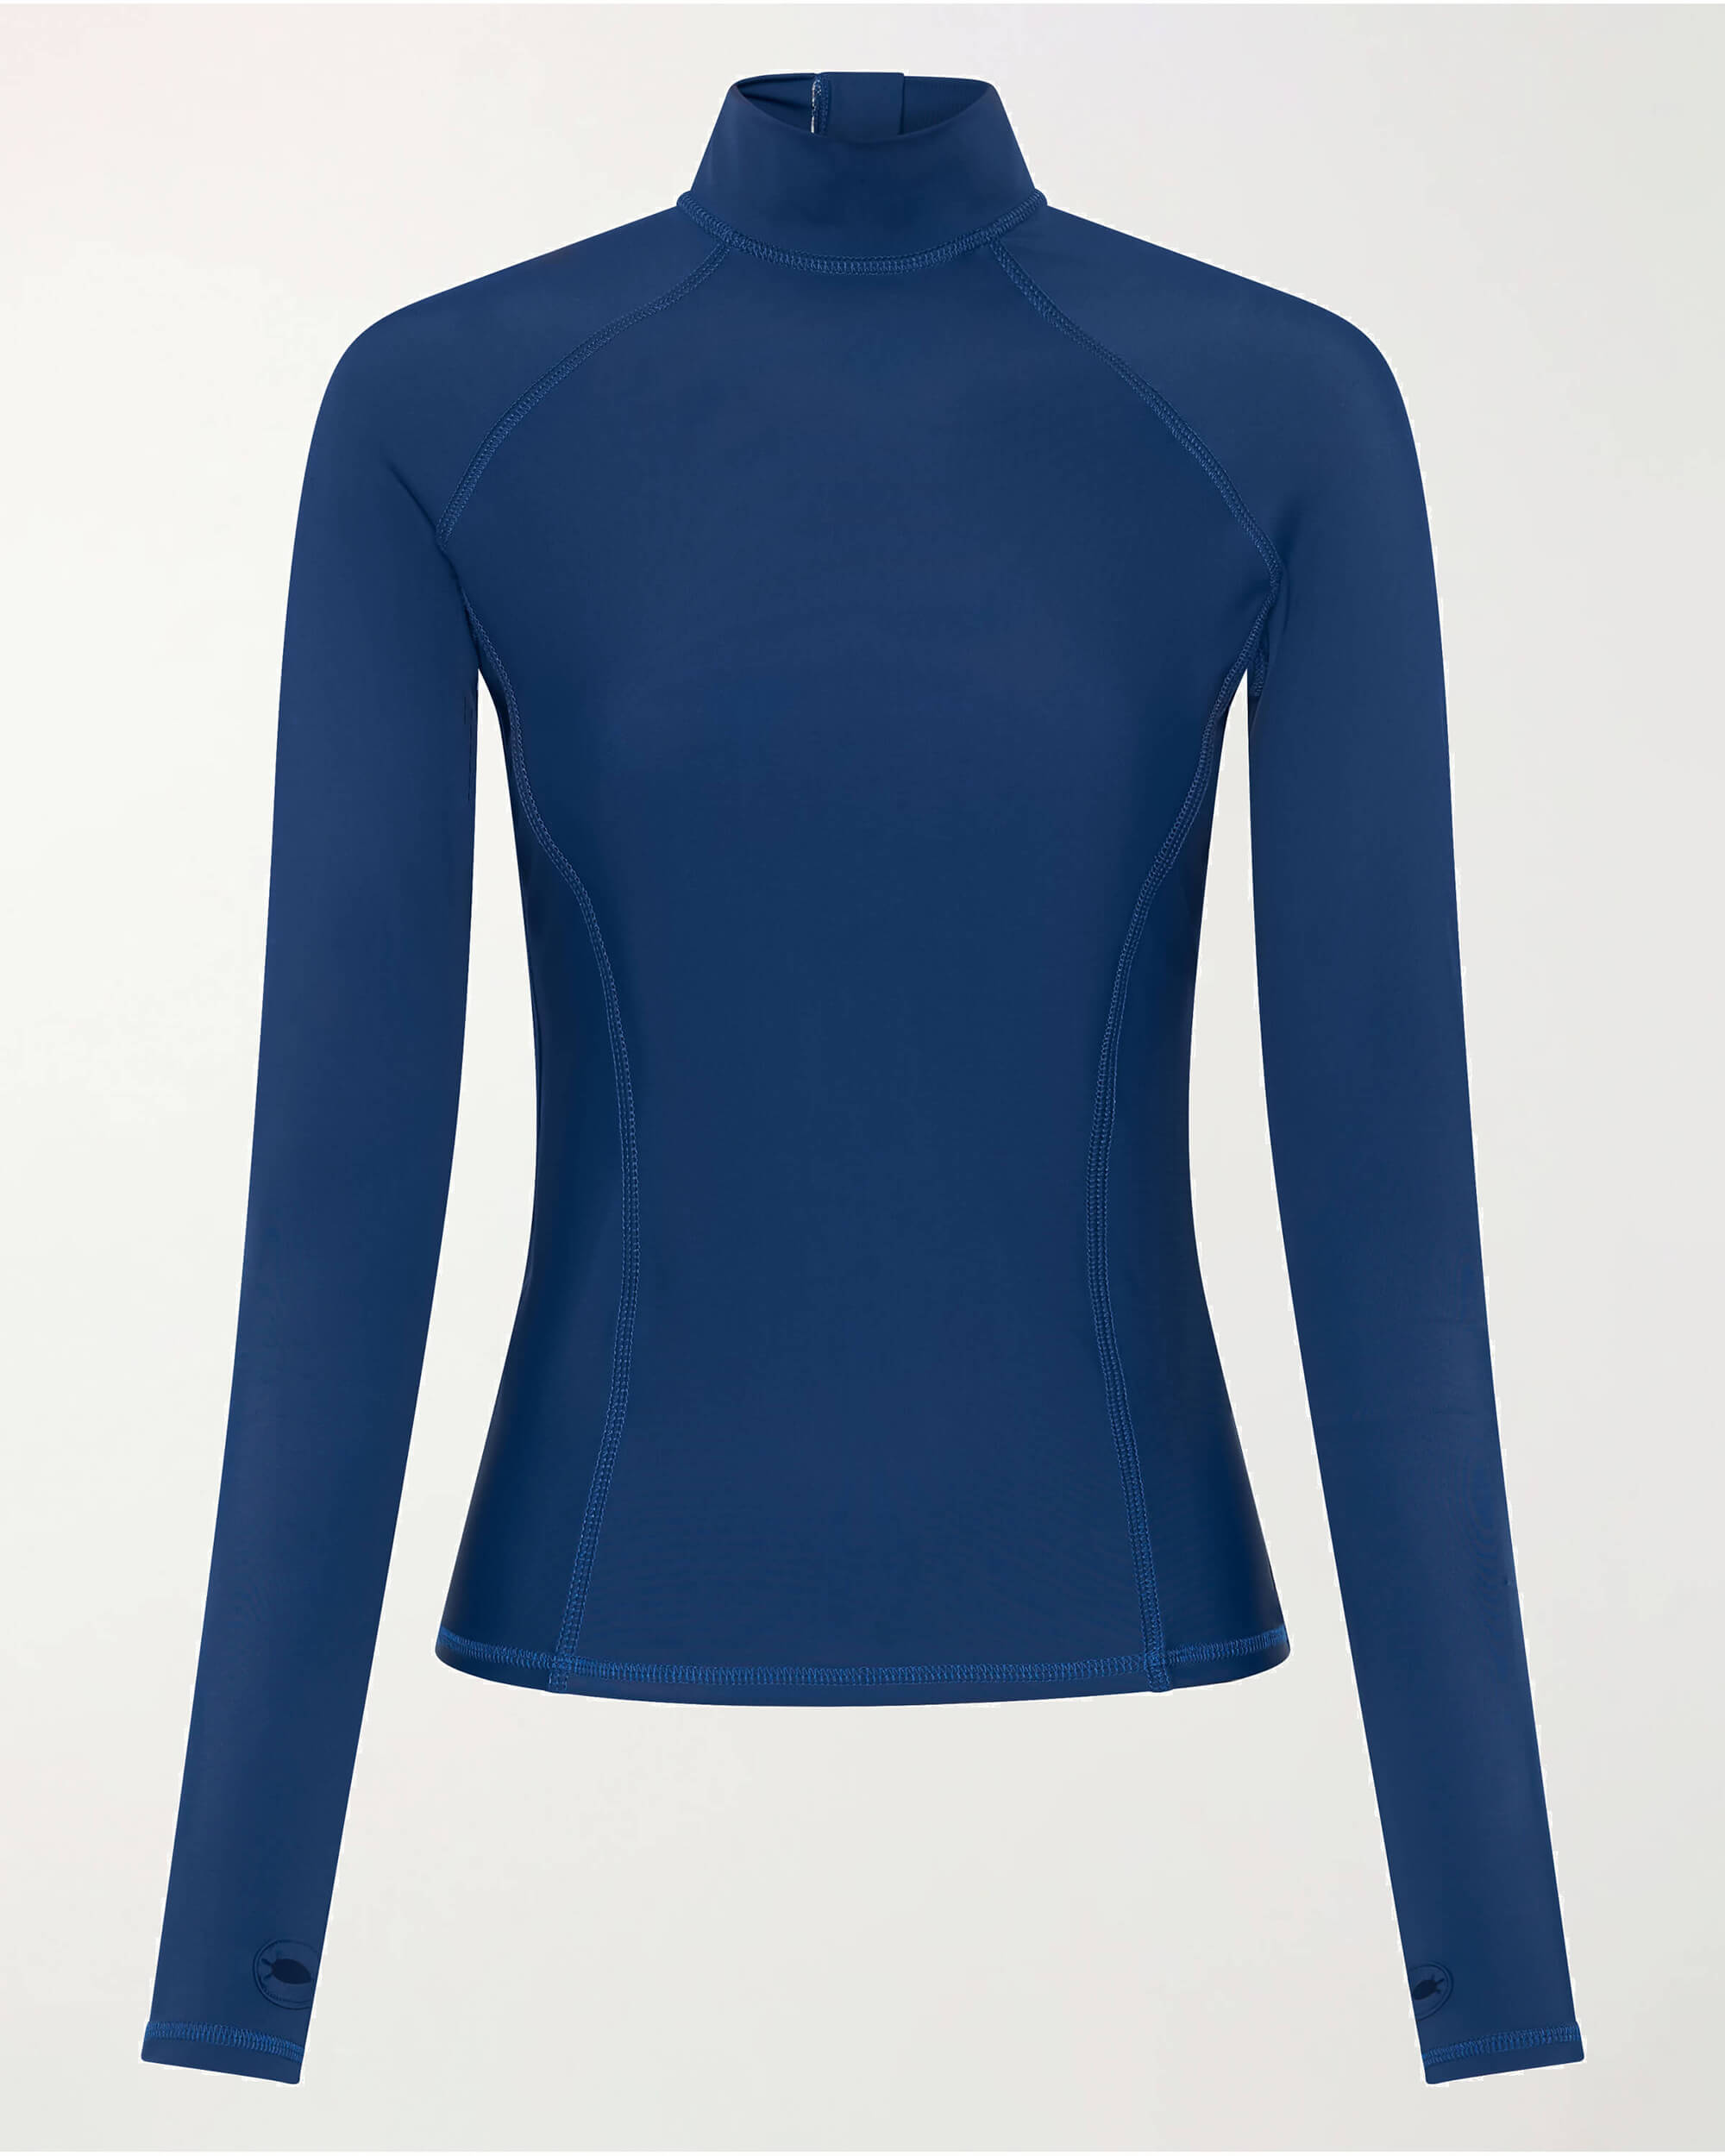  Mens Long Sleeve Swim Shirts Rash Guard UV Sun Protection SPF  T-Shirts UPF 50+ Quick Dry Swimming Fishing Ocean Blue Size M